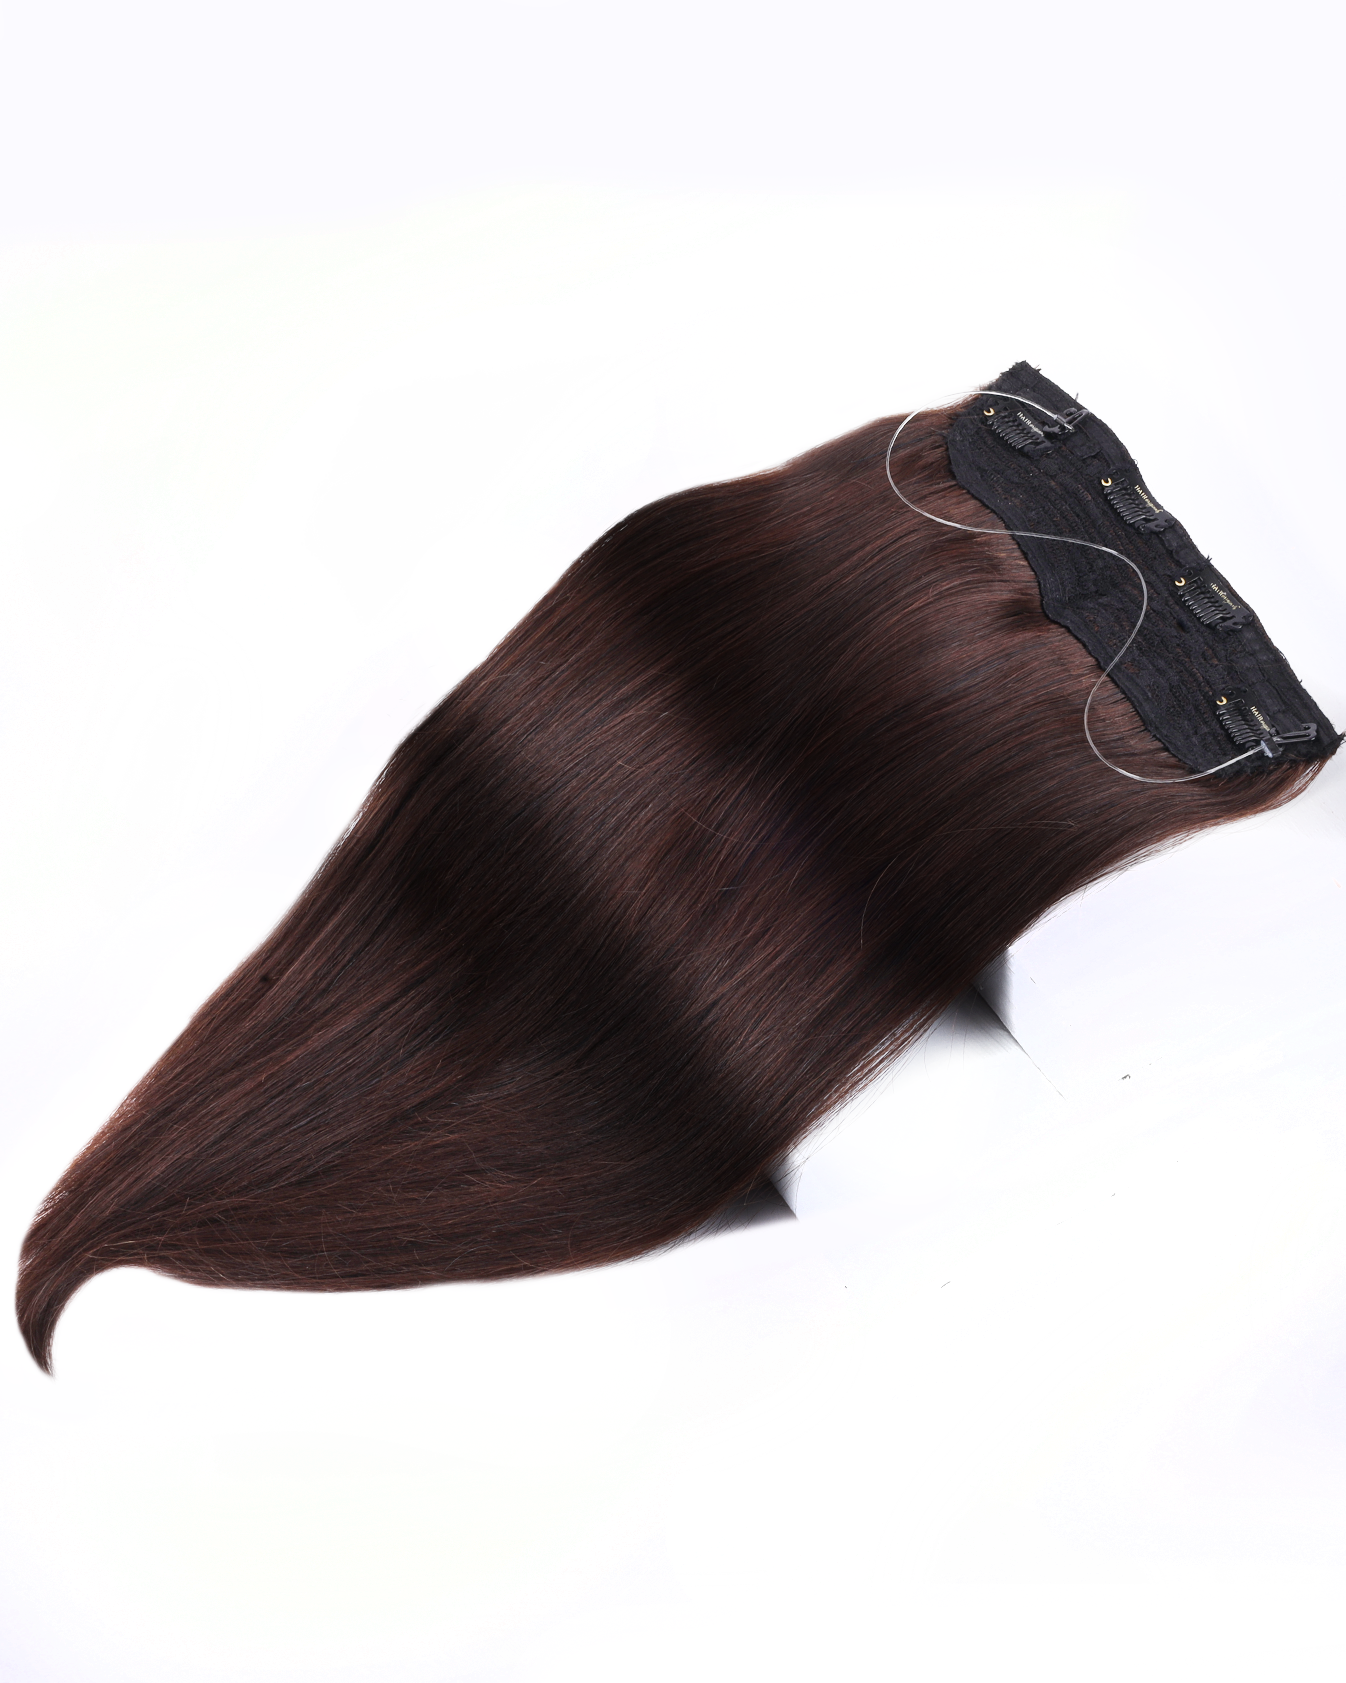 Halo Hair Extensions  HairOriginals Natural Brown Wavy 18 Inch